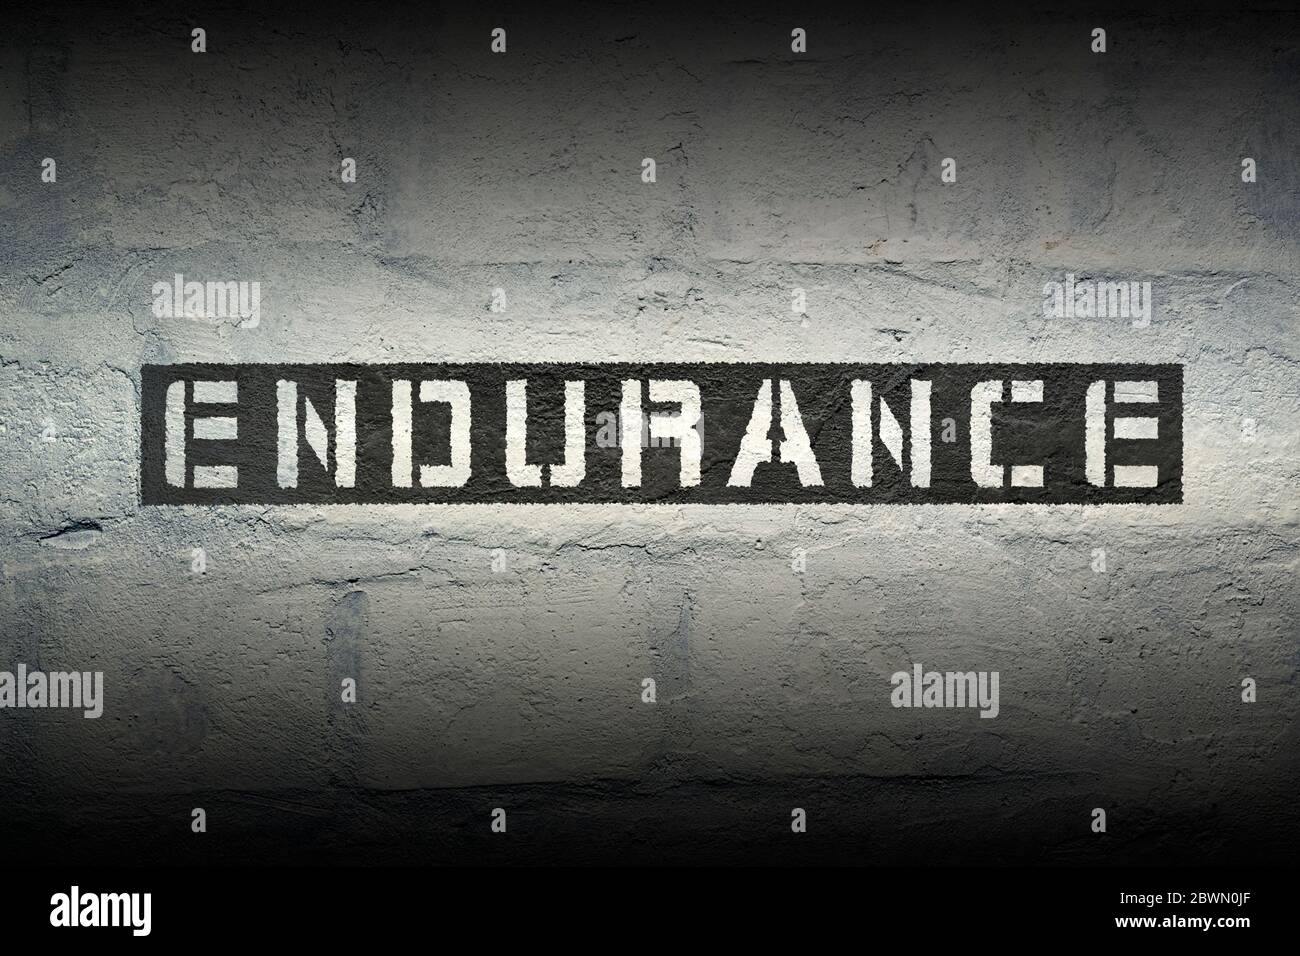 endurance stencil print on the grunge white brick wall Stock Photo